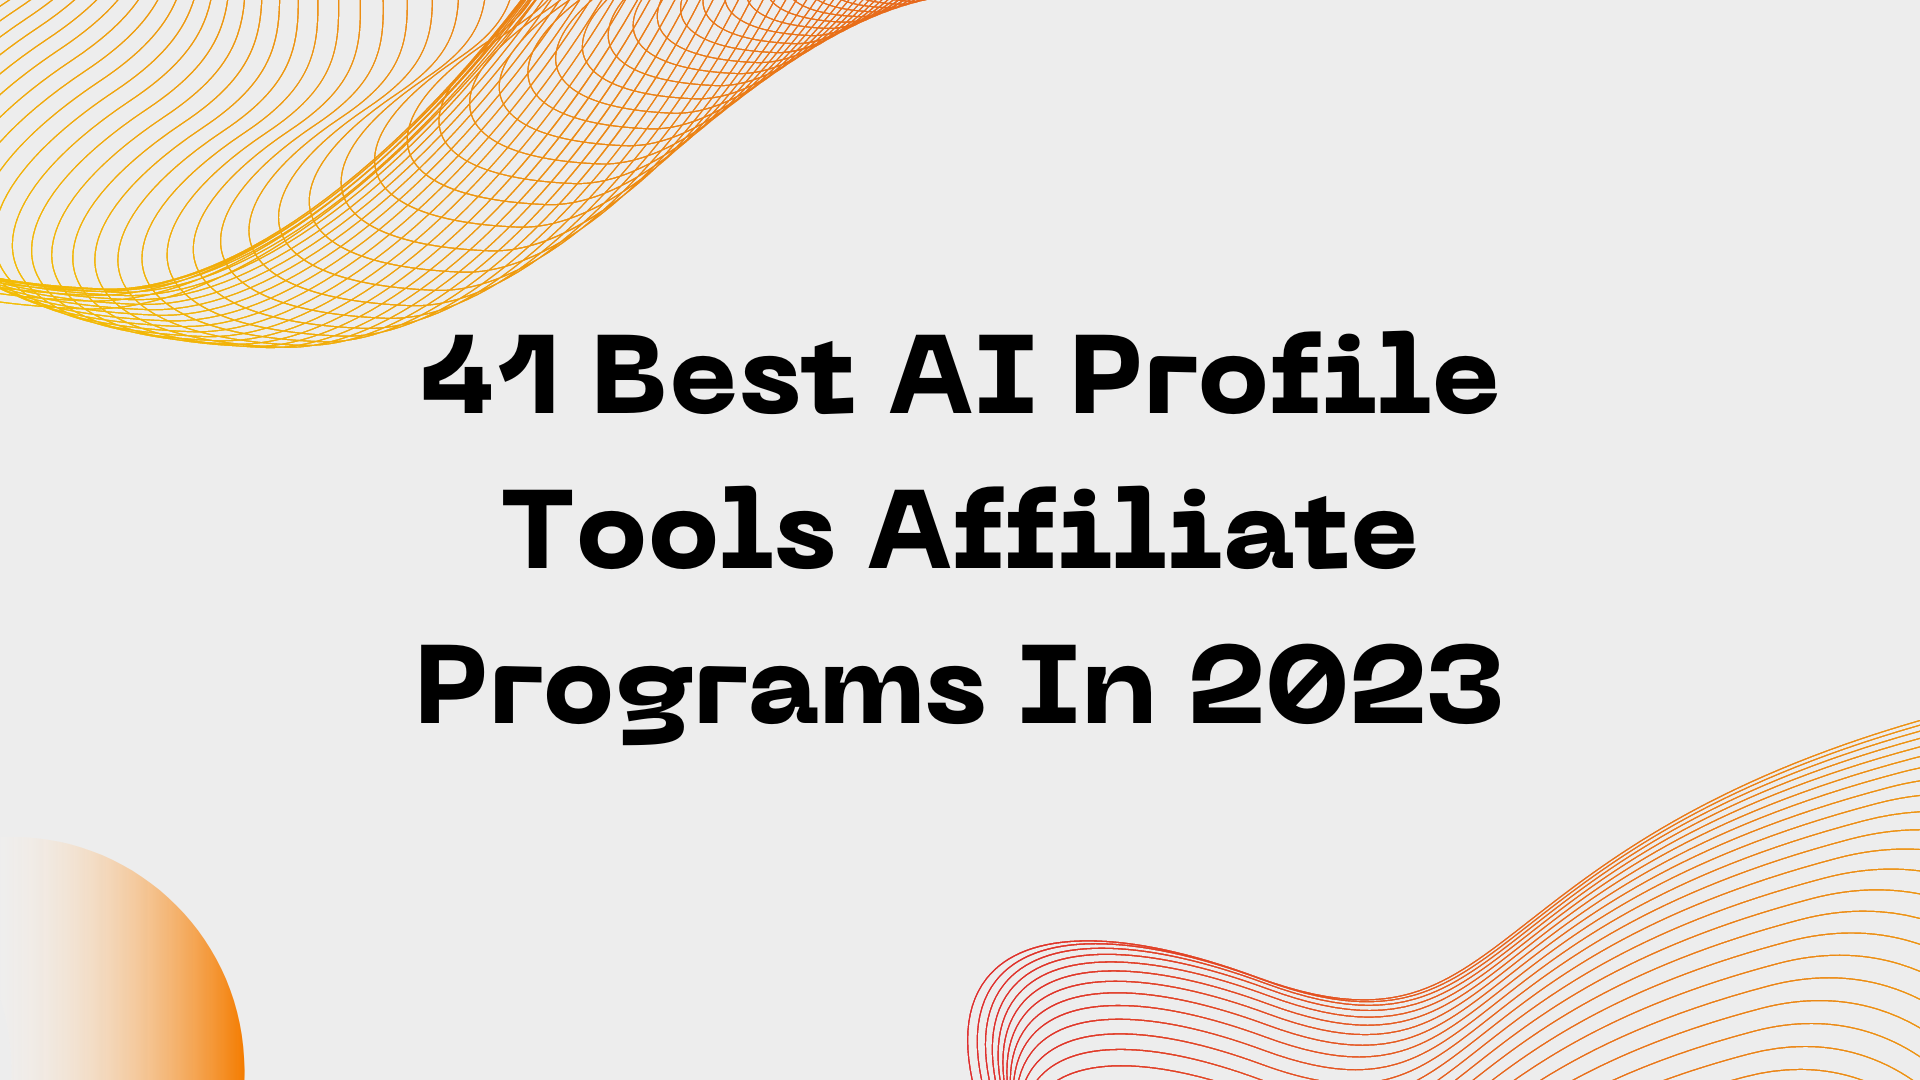 41 Best AI Profile Tools Affiliate Programs In 2023